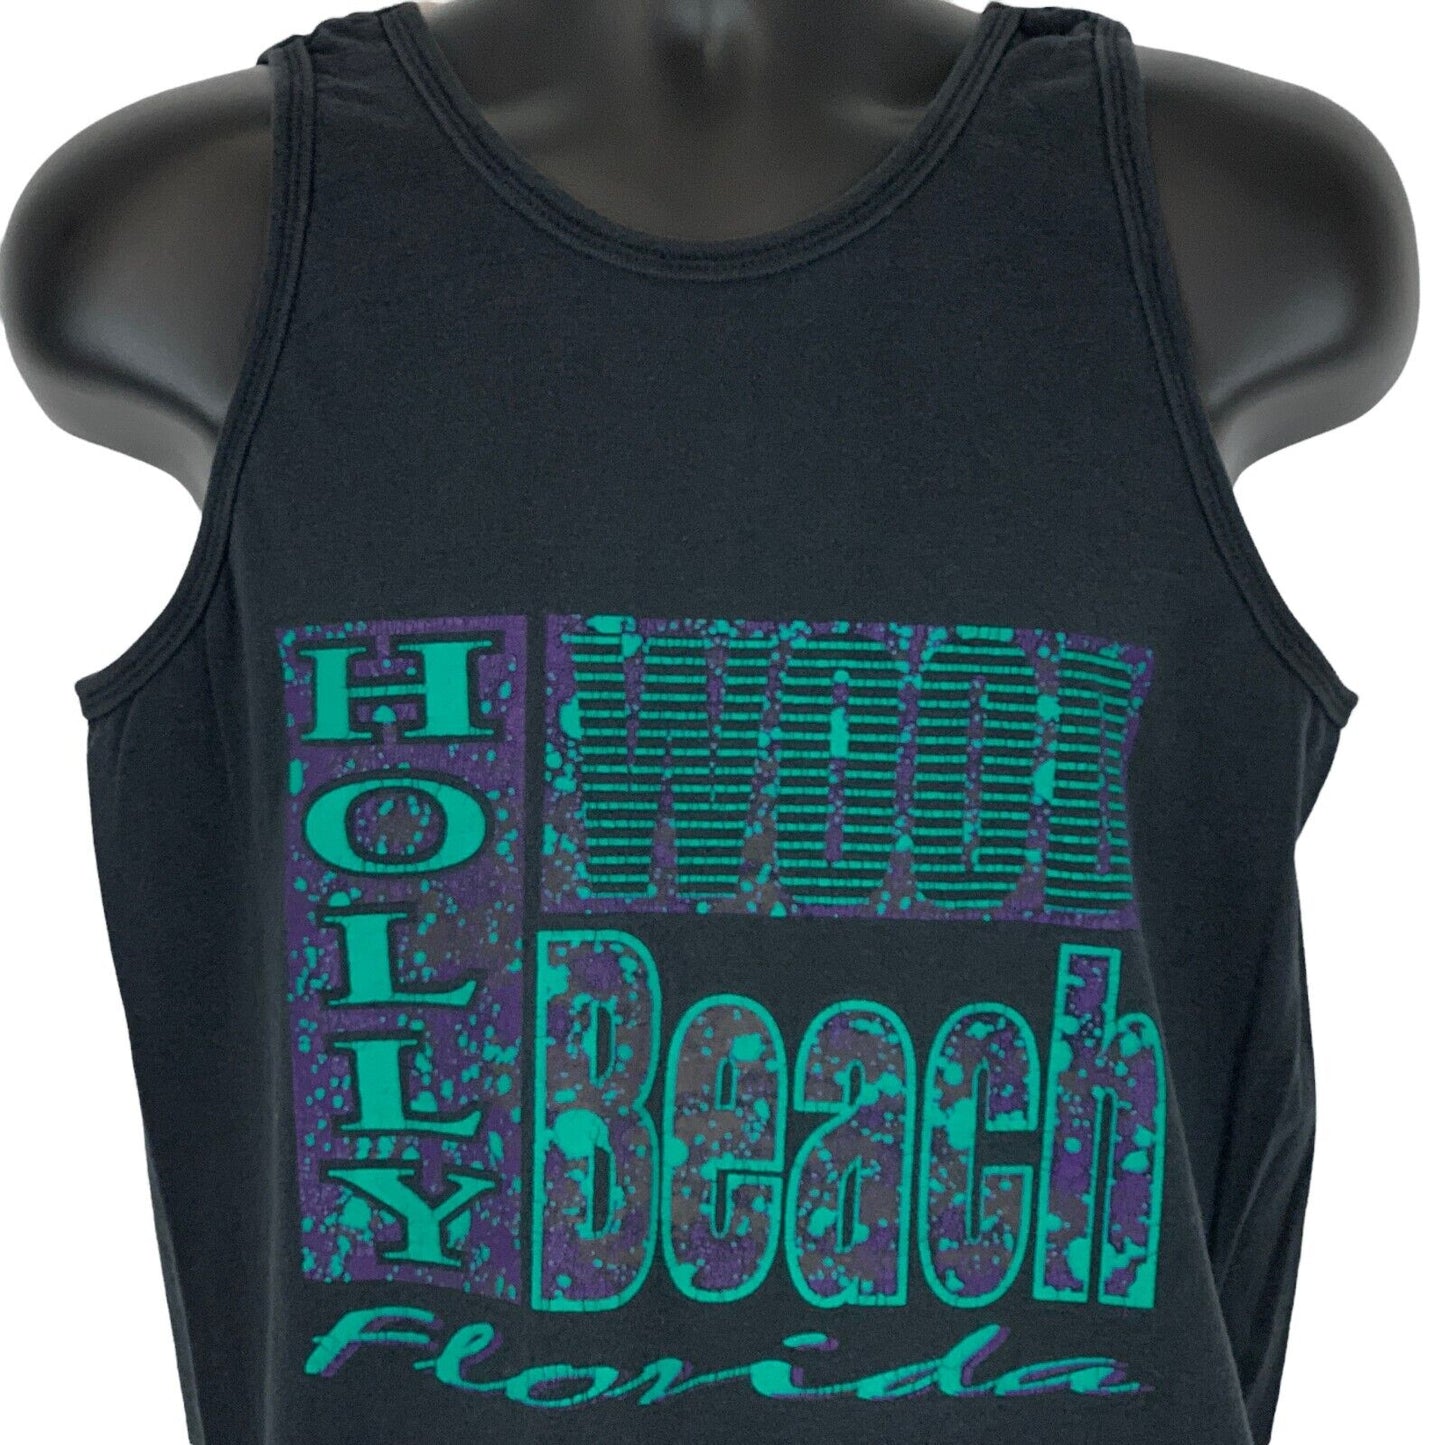 Hollywood Beach Florida Vintage 90s Tank Top T Shirt Black Made In USA Medium